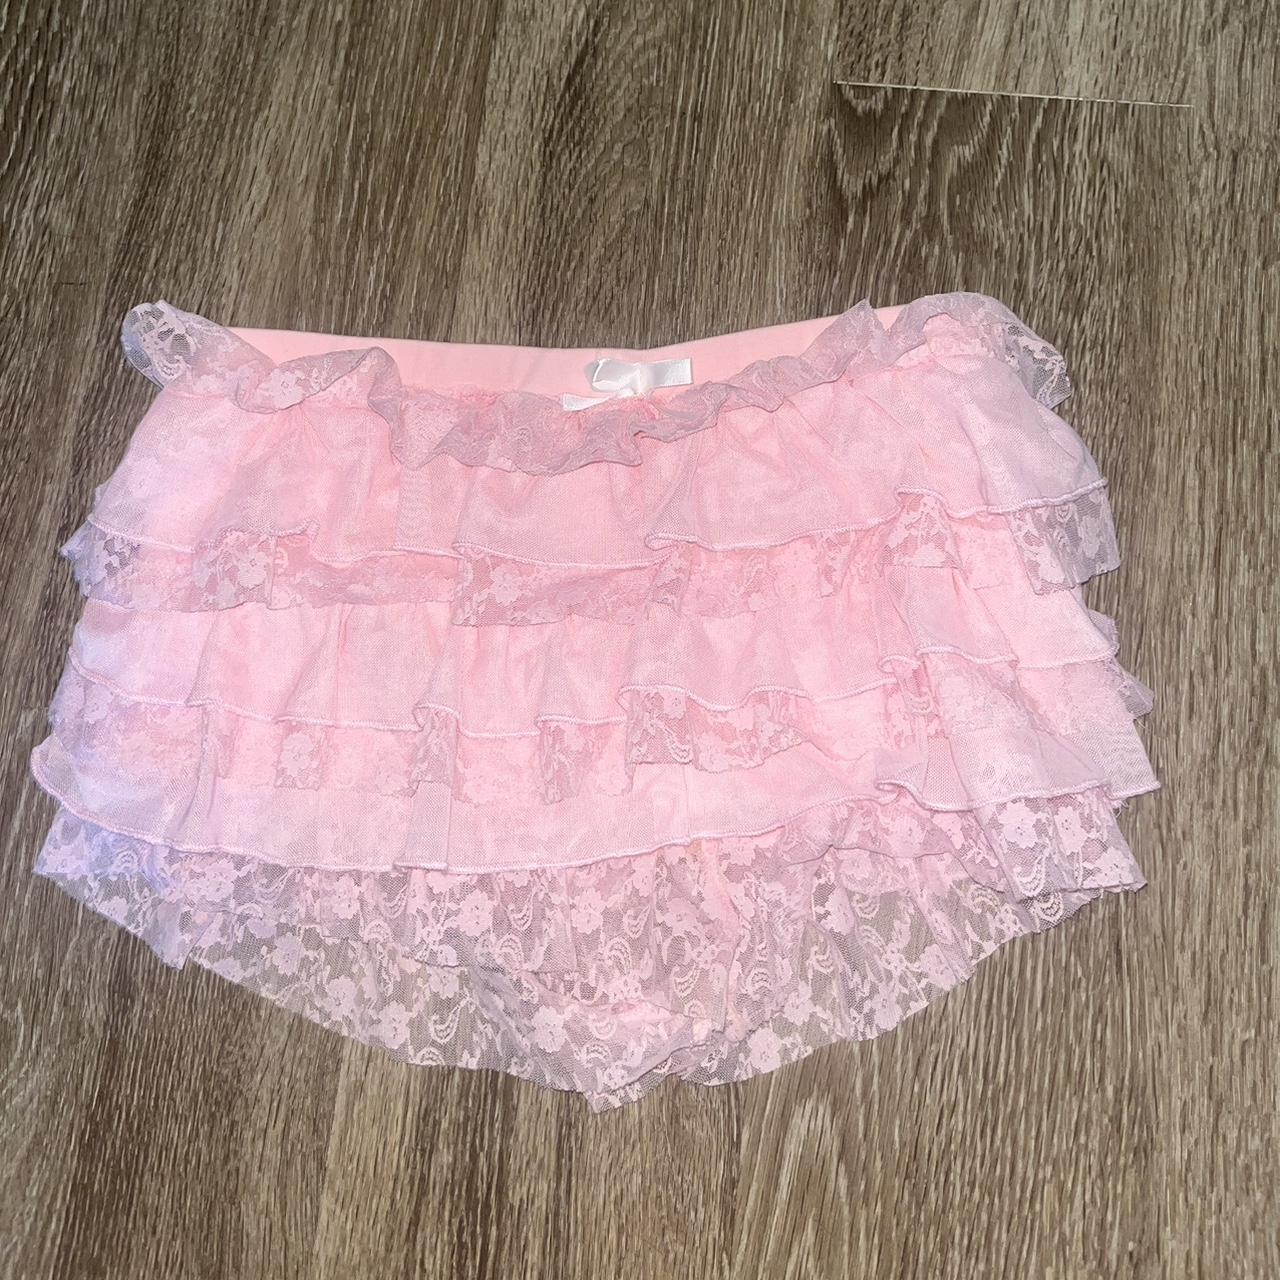 Edikted Unicorn Lace Ruffle Shorts in Pink